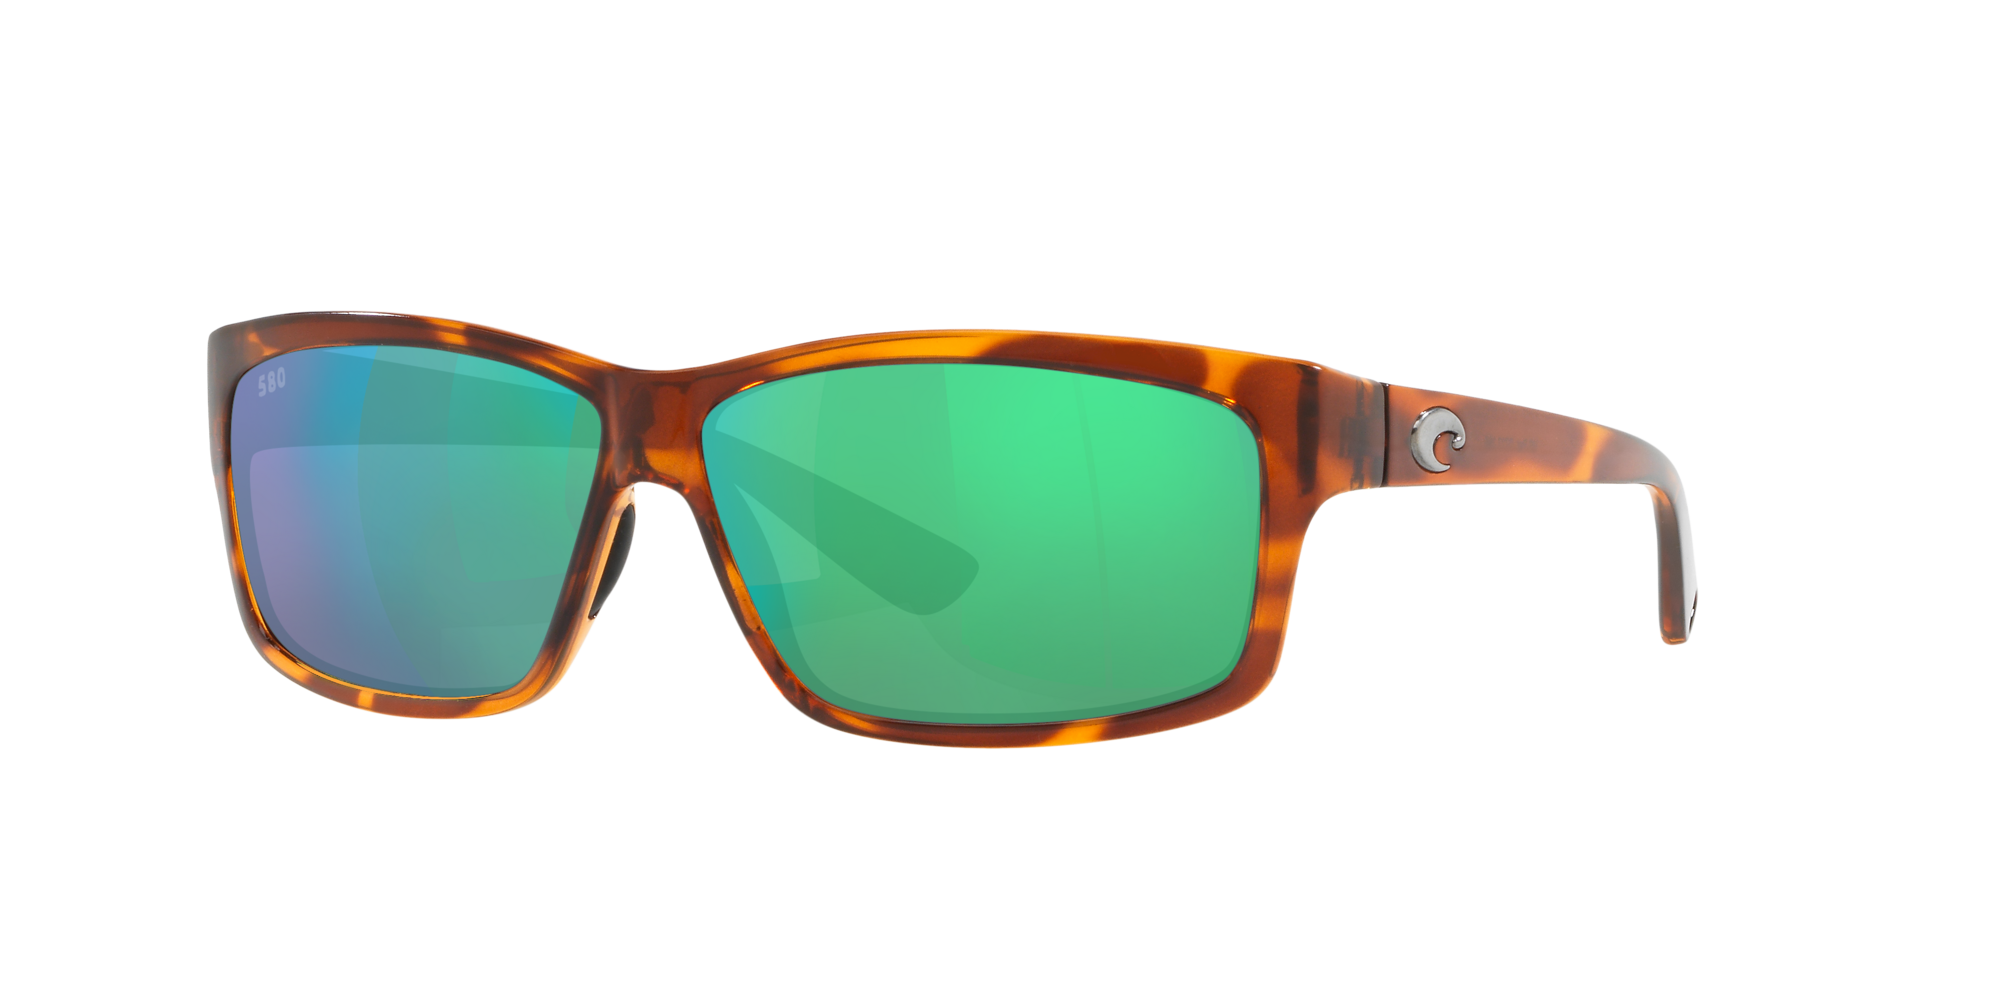 New Costa Del Mar Fishing Sunglasses COPRA Tortoise Green Mirror 580G POLARIZED 